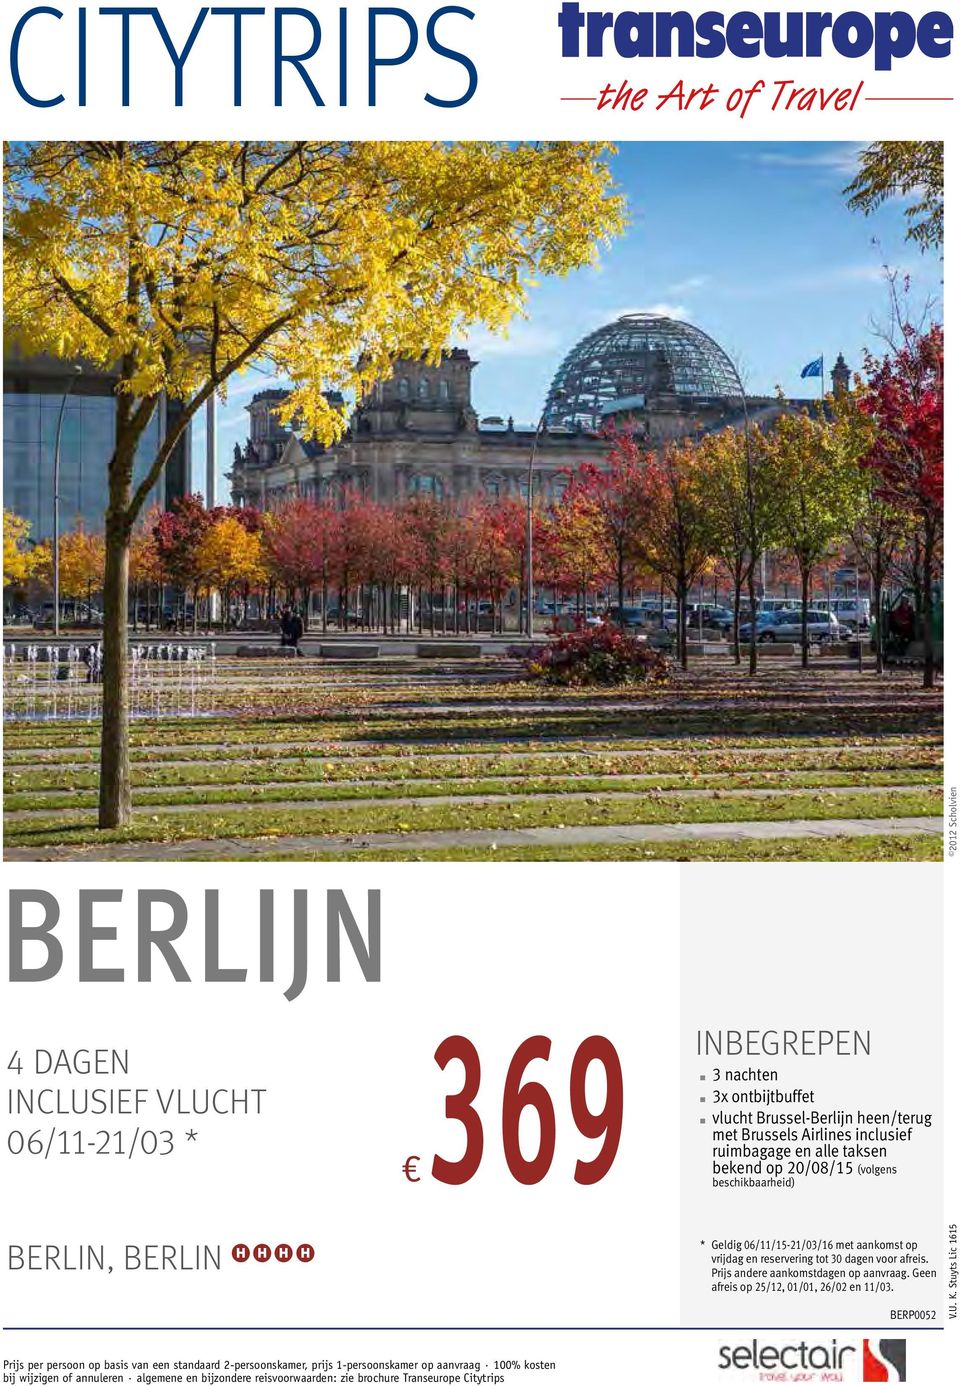 beschikbaarheid) BERLIN, BERLIN HHHH * Geldig 06/11/15-21/03/16 met aankomst op